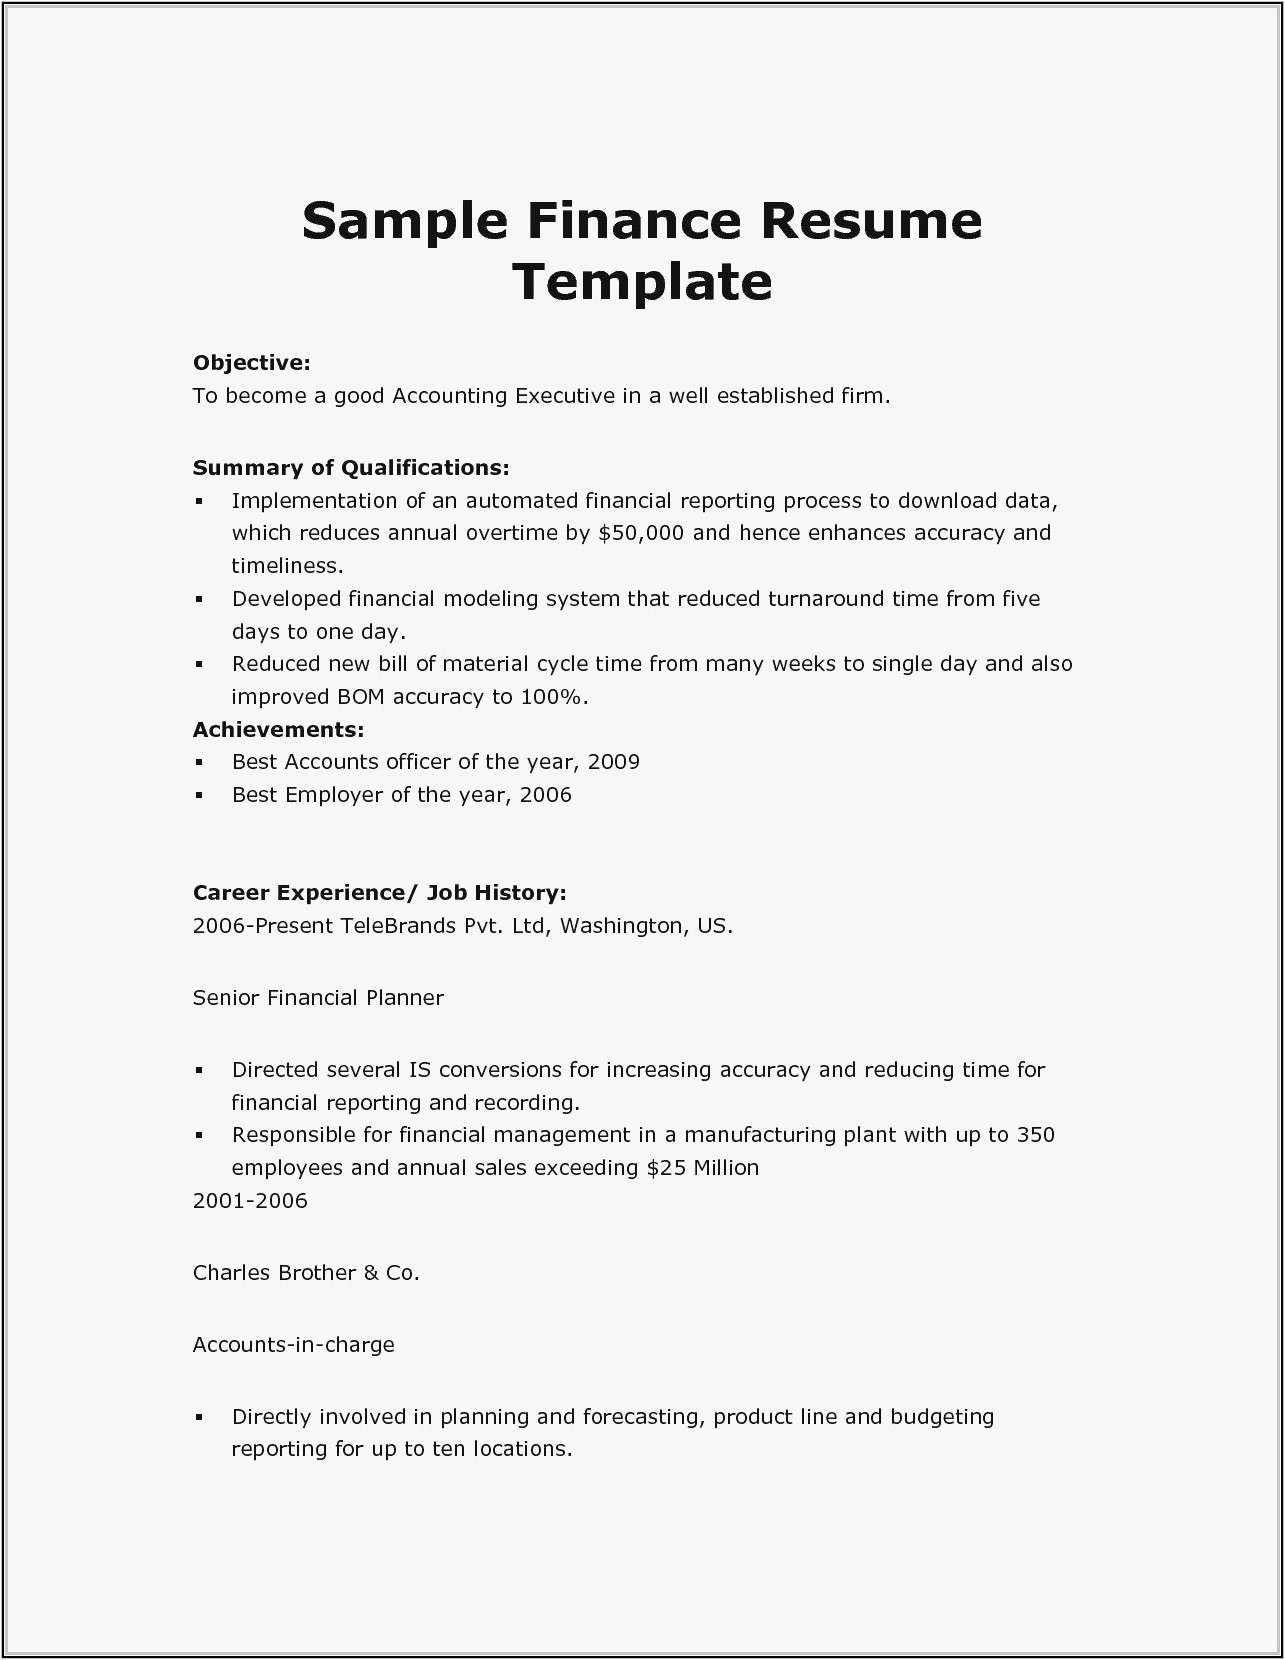 Sample Resume for Mba Freshers In Finance Sample Resume for Mba Freshers In Finance